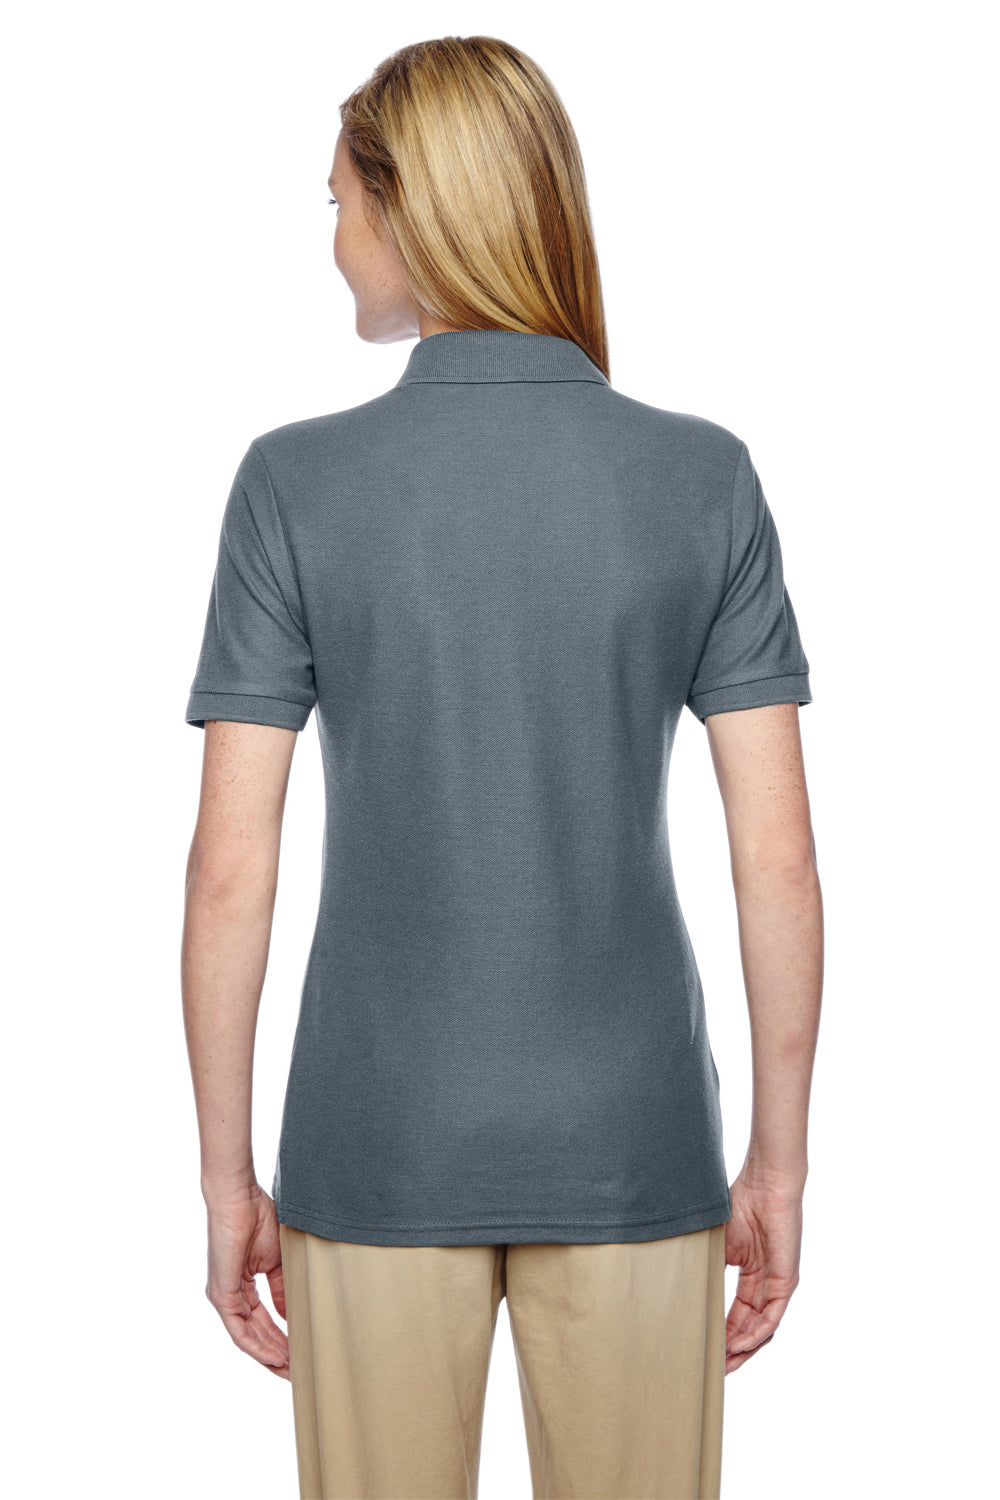 Jerzees 537WR Womens Easy Care Moisture Wicking Short Sleeve Polo Shirt Charcoal Grey Back